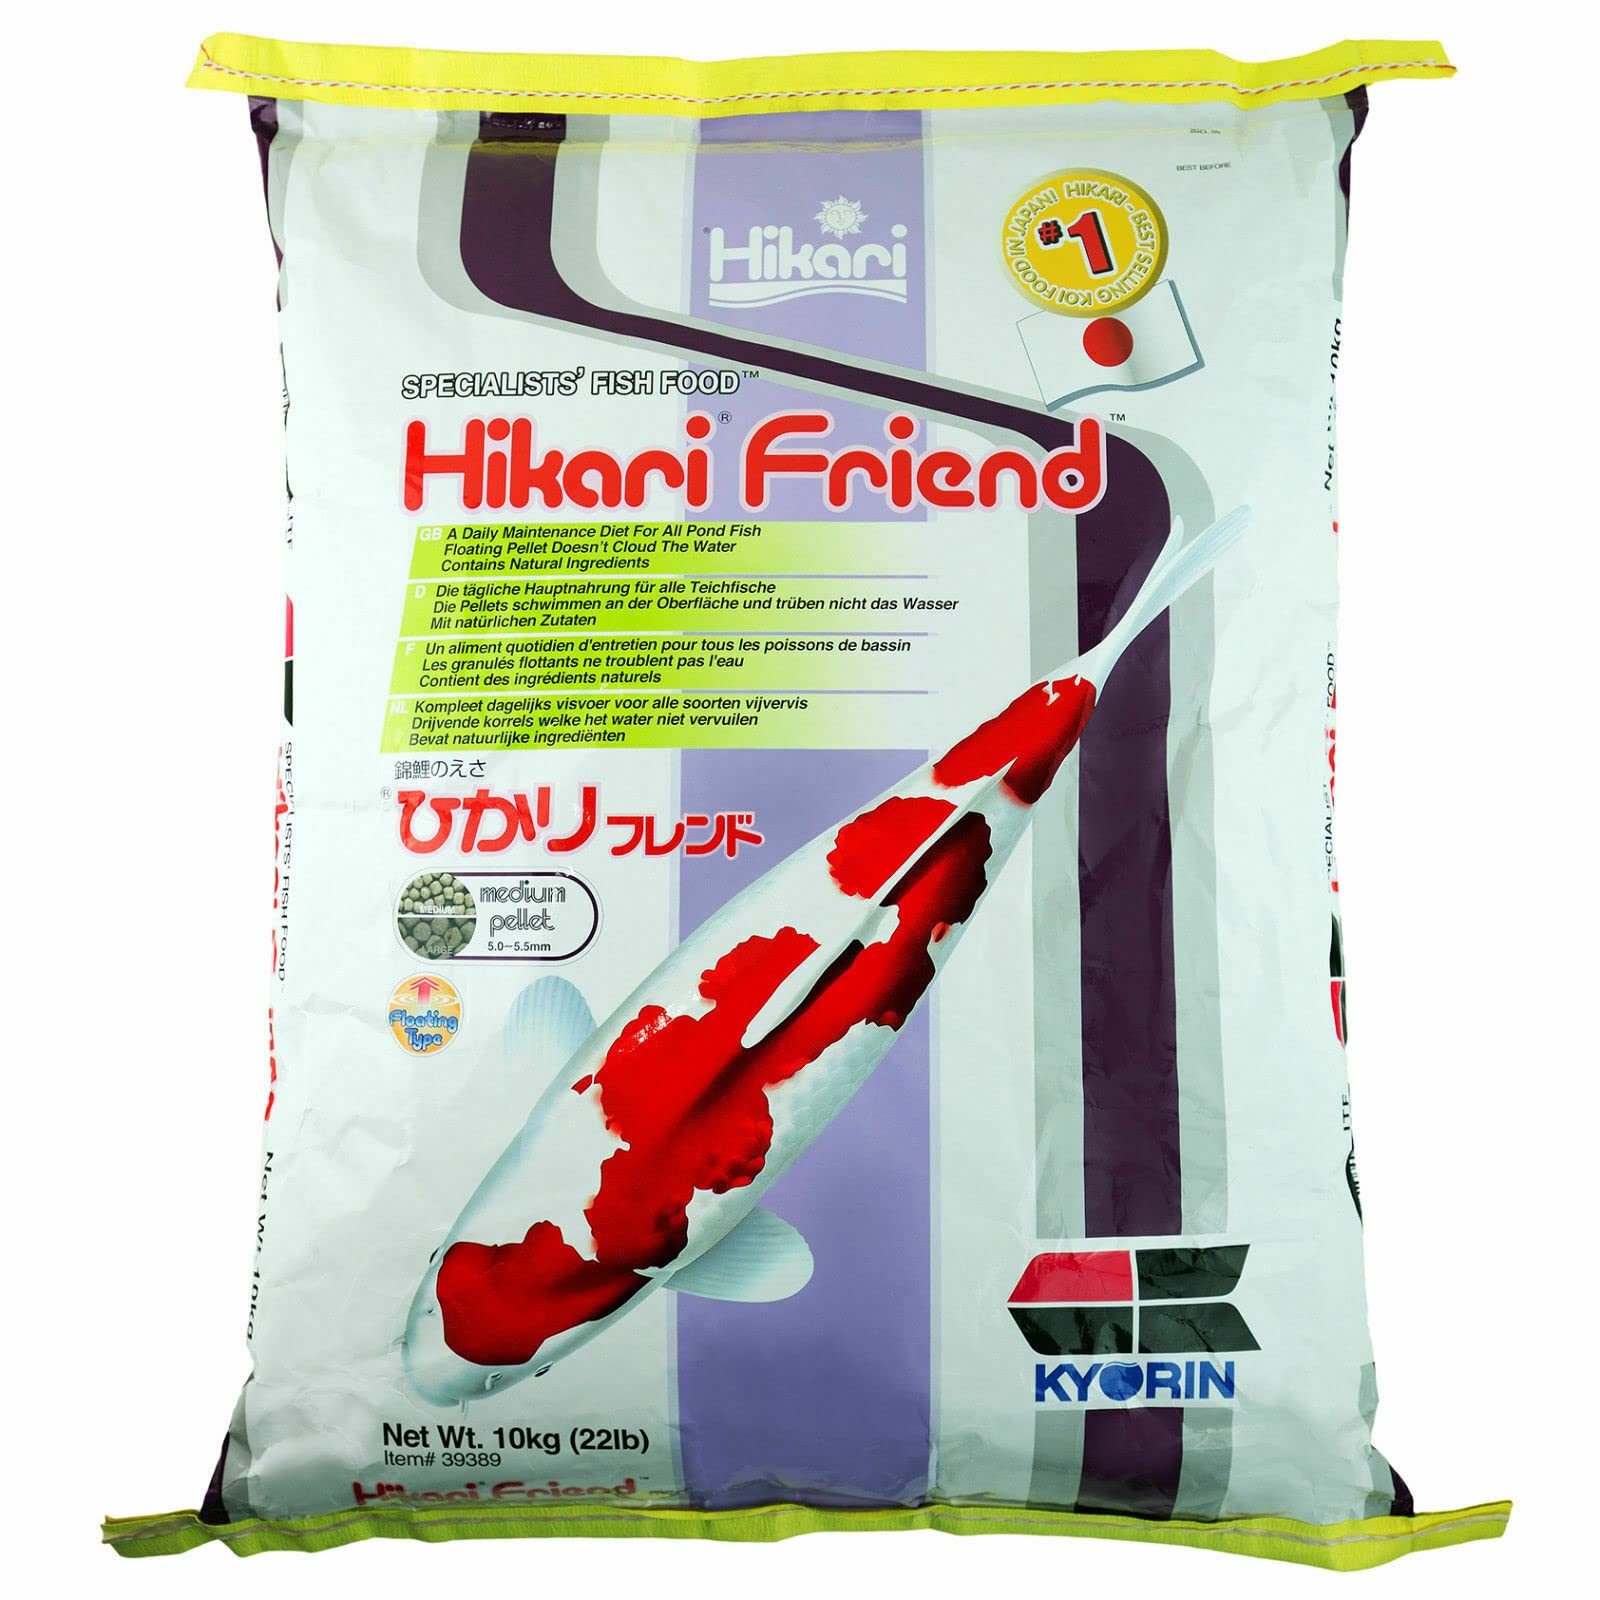 Hikari "Friend" - Medium, 1x 10kg